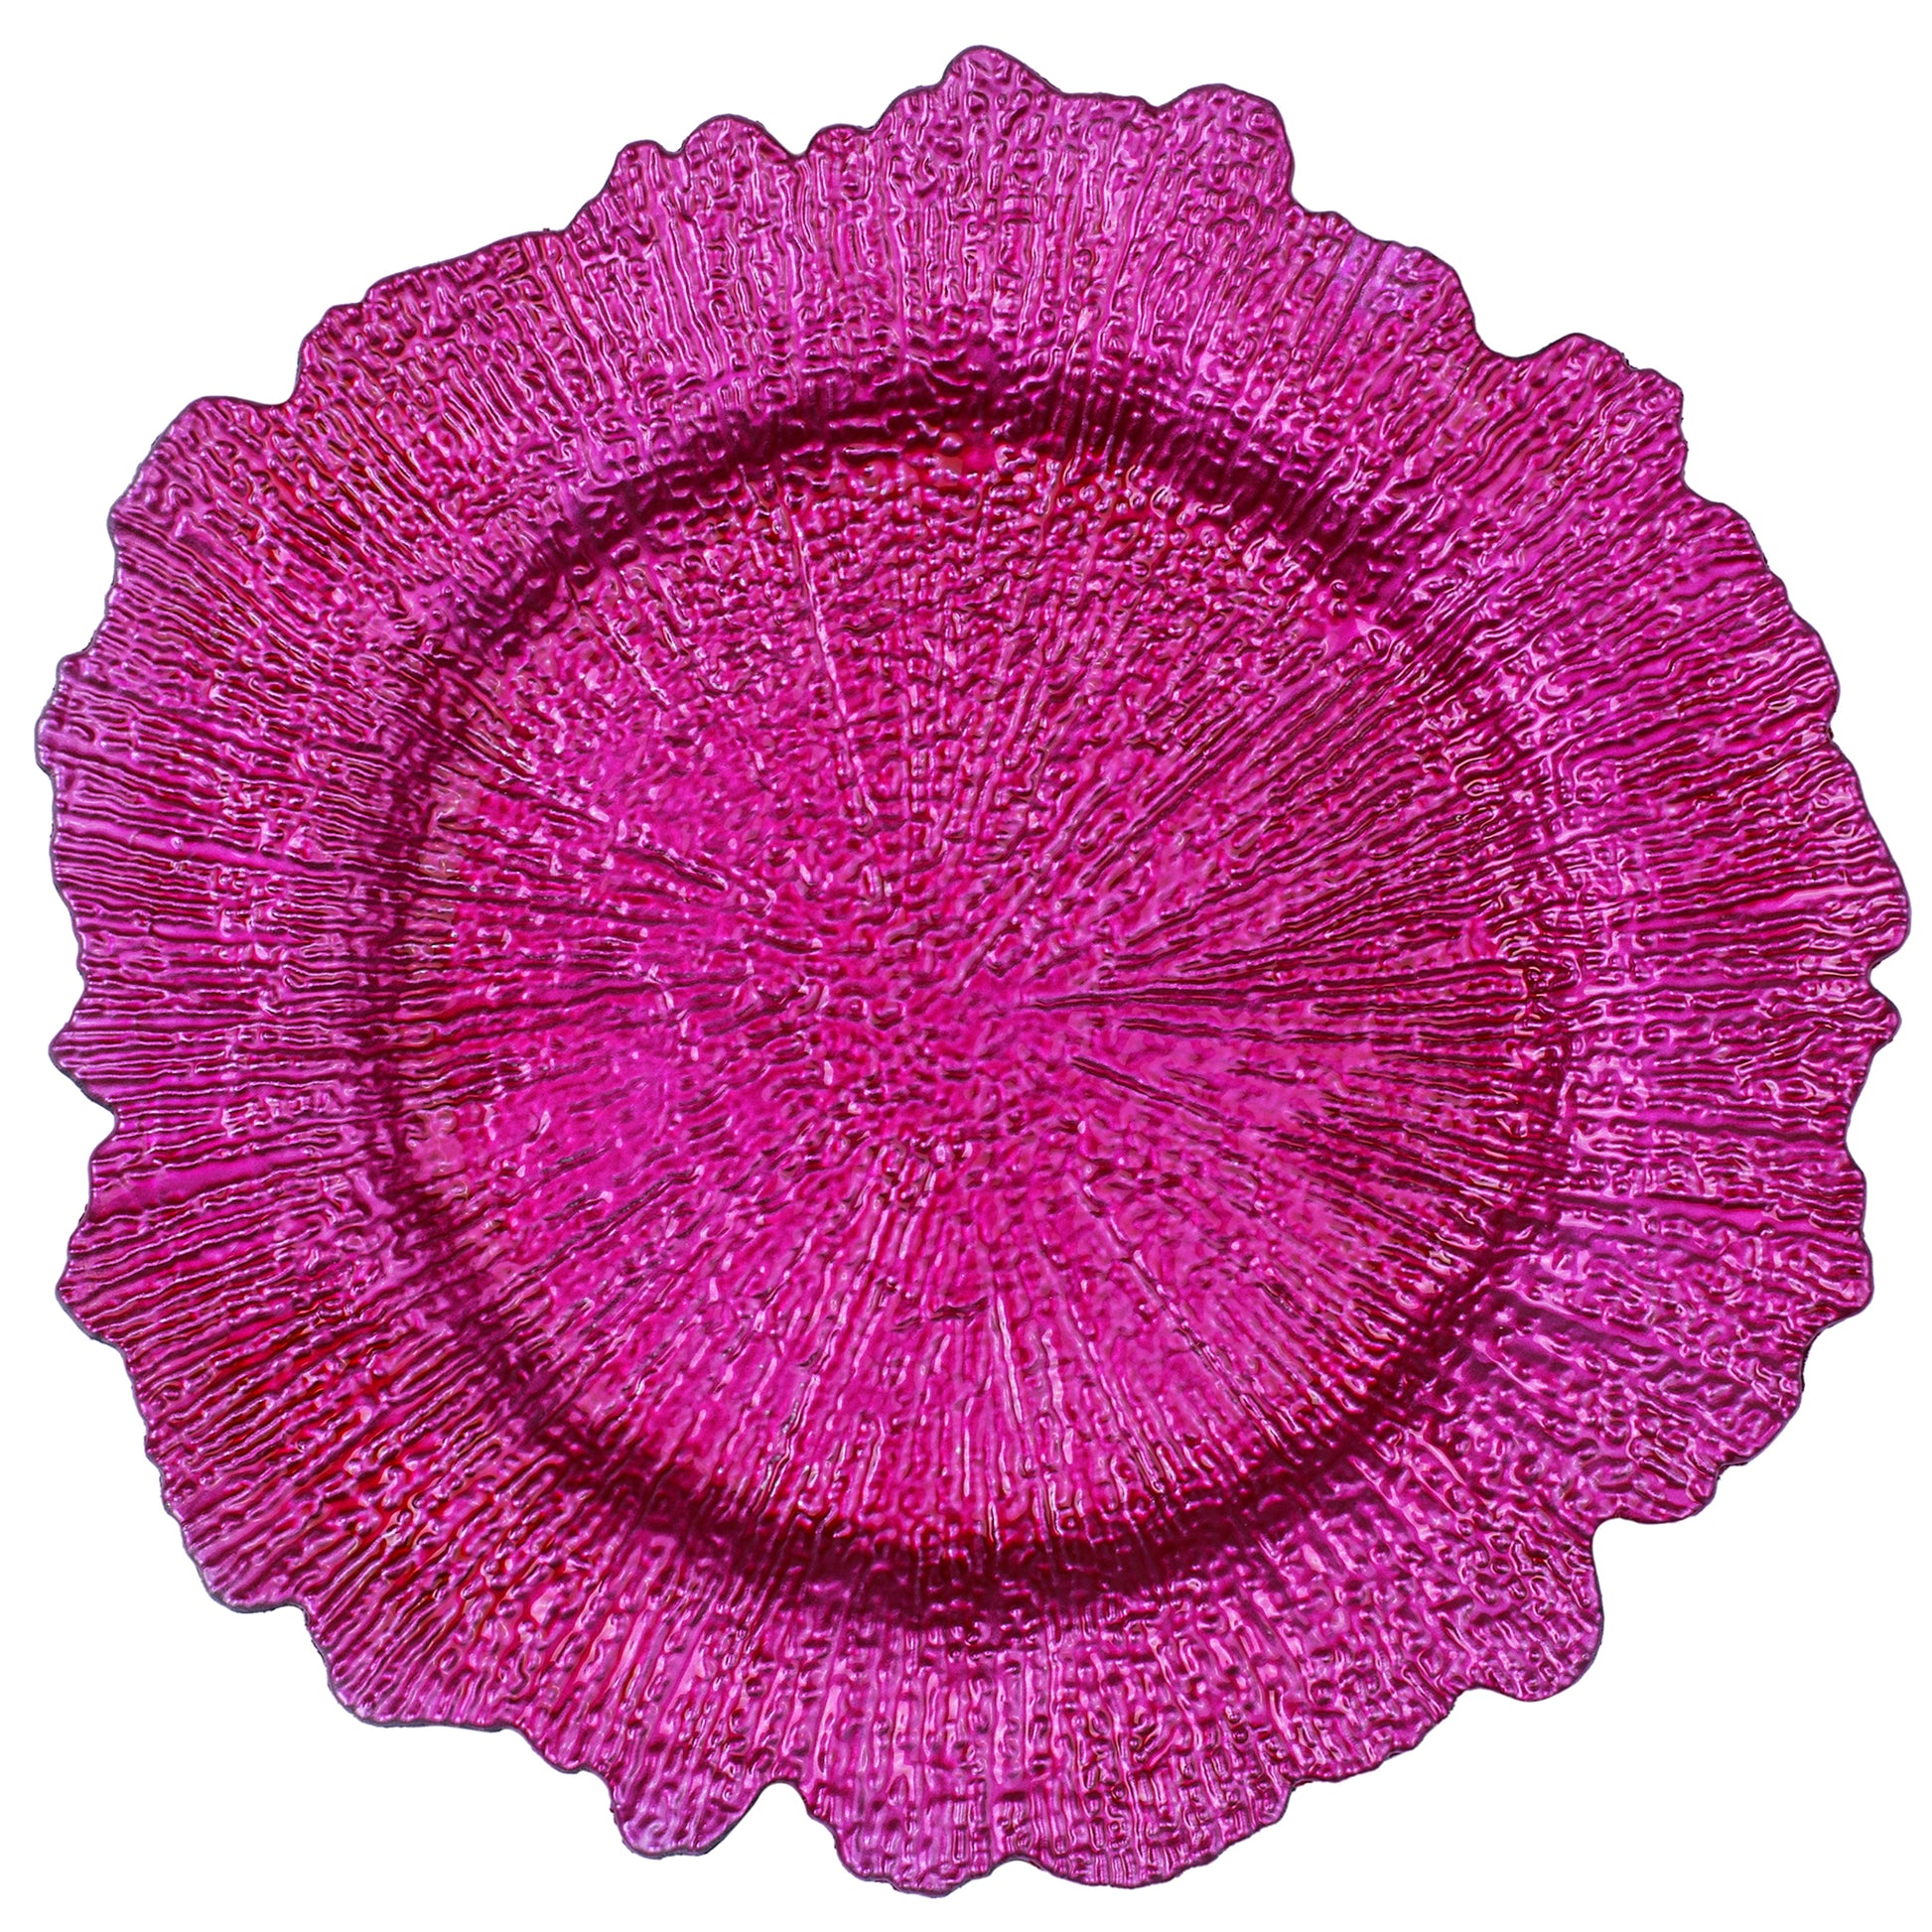 Reef Acrylic Plastic Charger Plate - Fuchsia - CV Linens